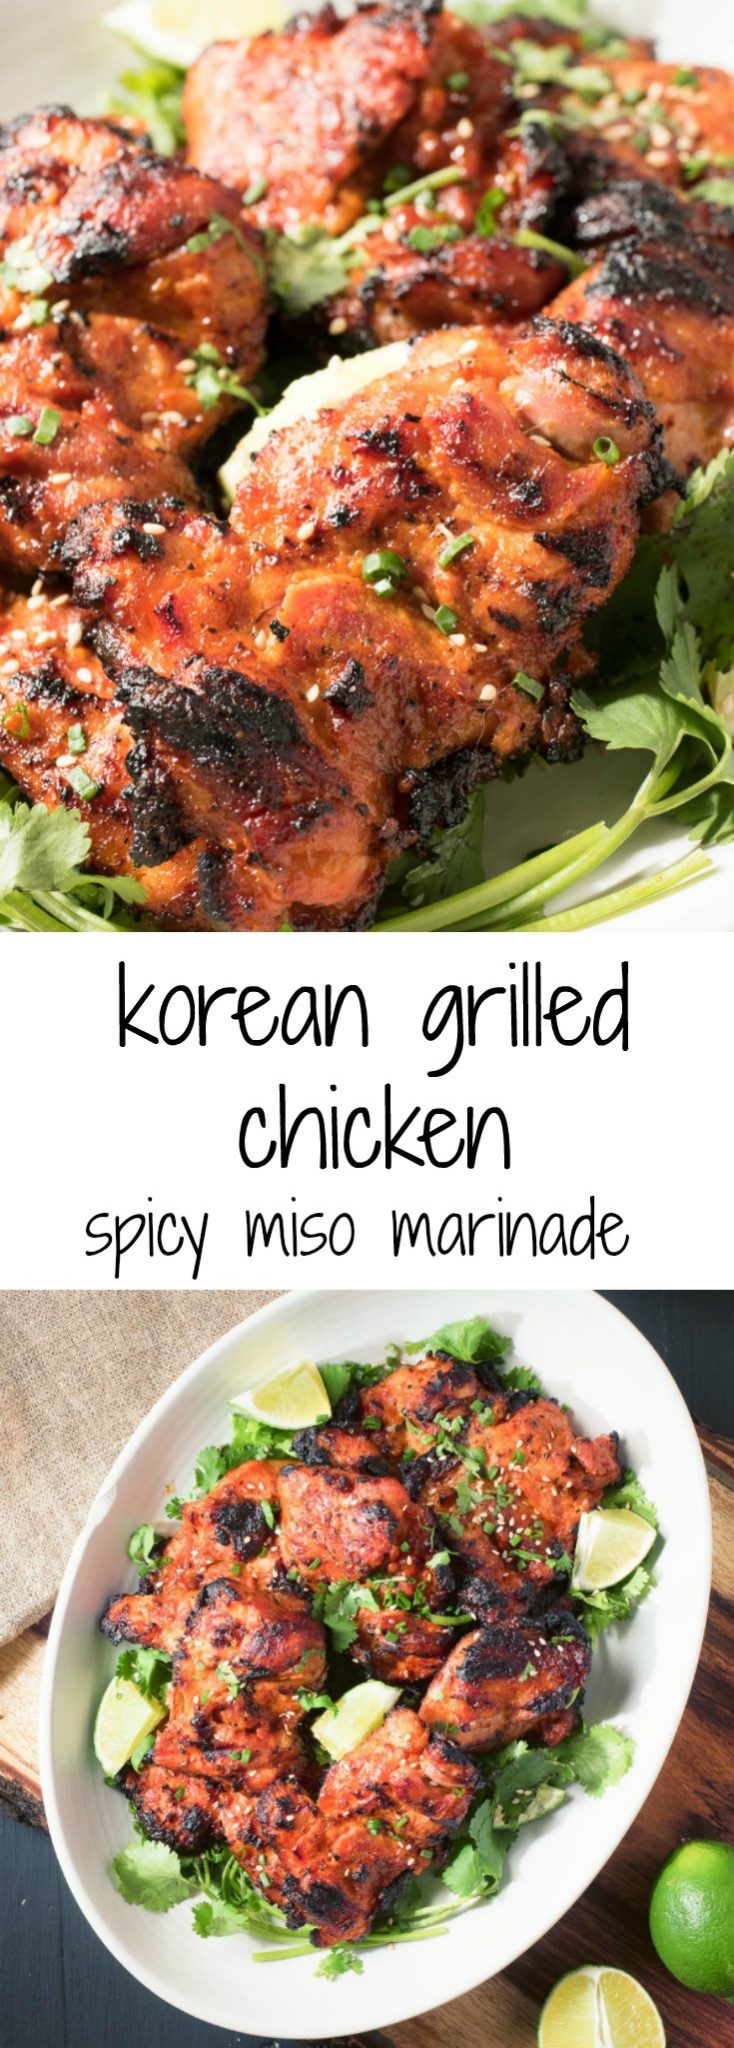 Korean grilled chicken with a gochujang, miso marinade.